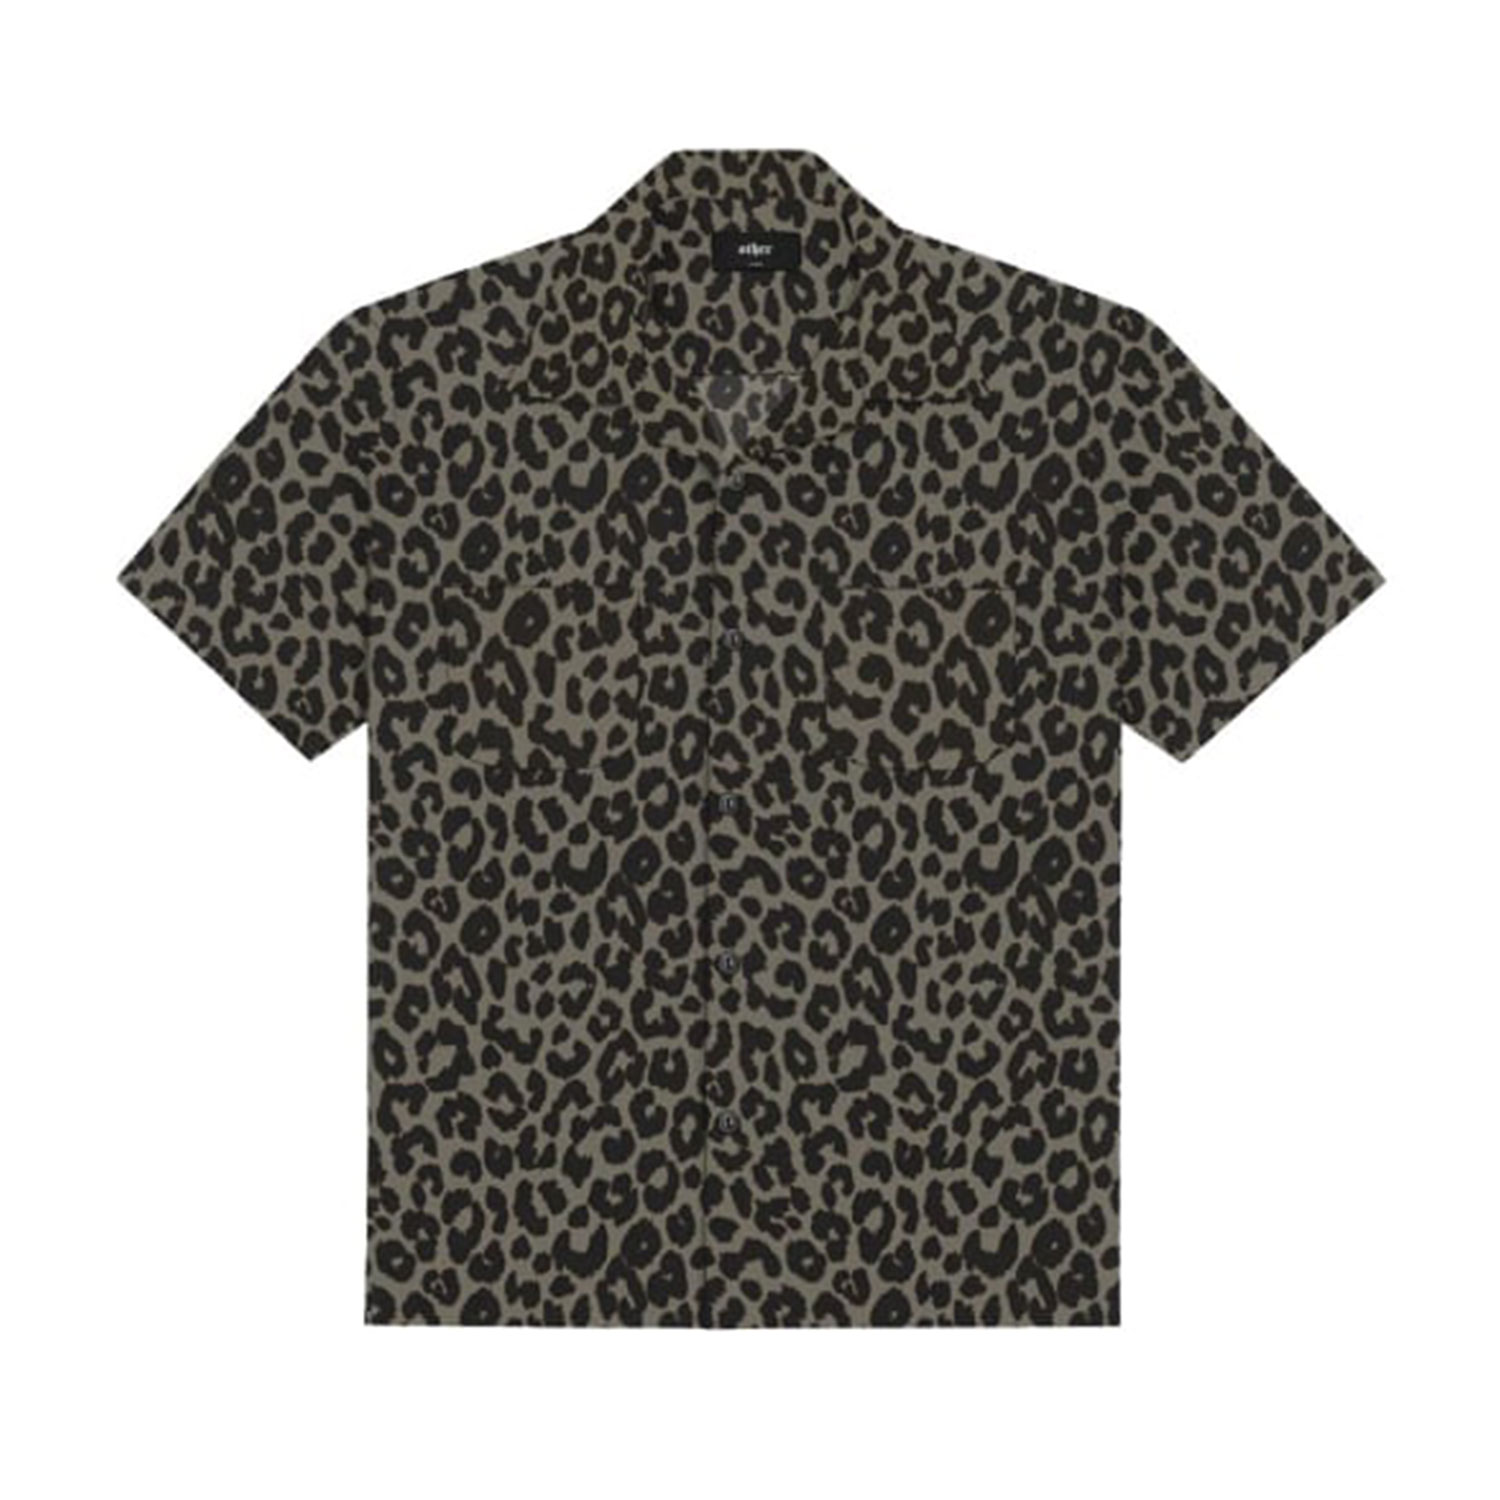 Men’s Black Cuban Shirt - Leopard Camo Extra Large OTHER UK